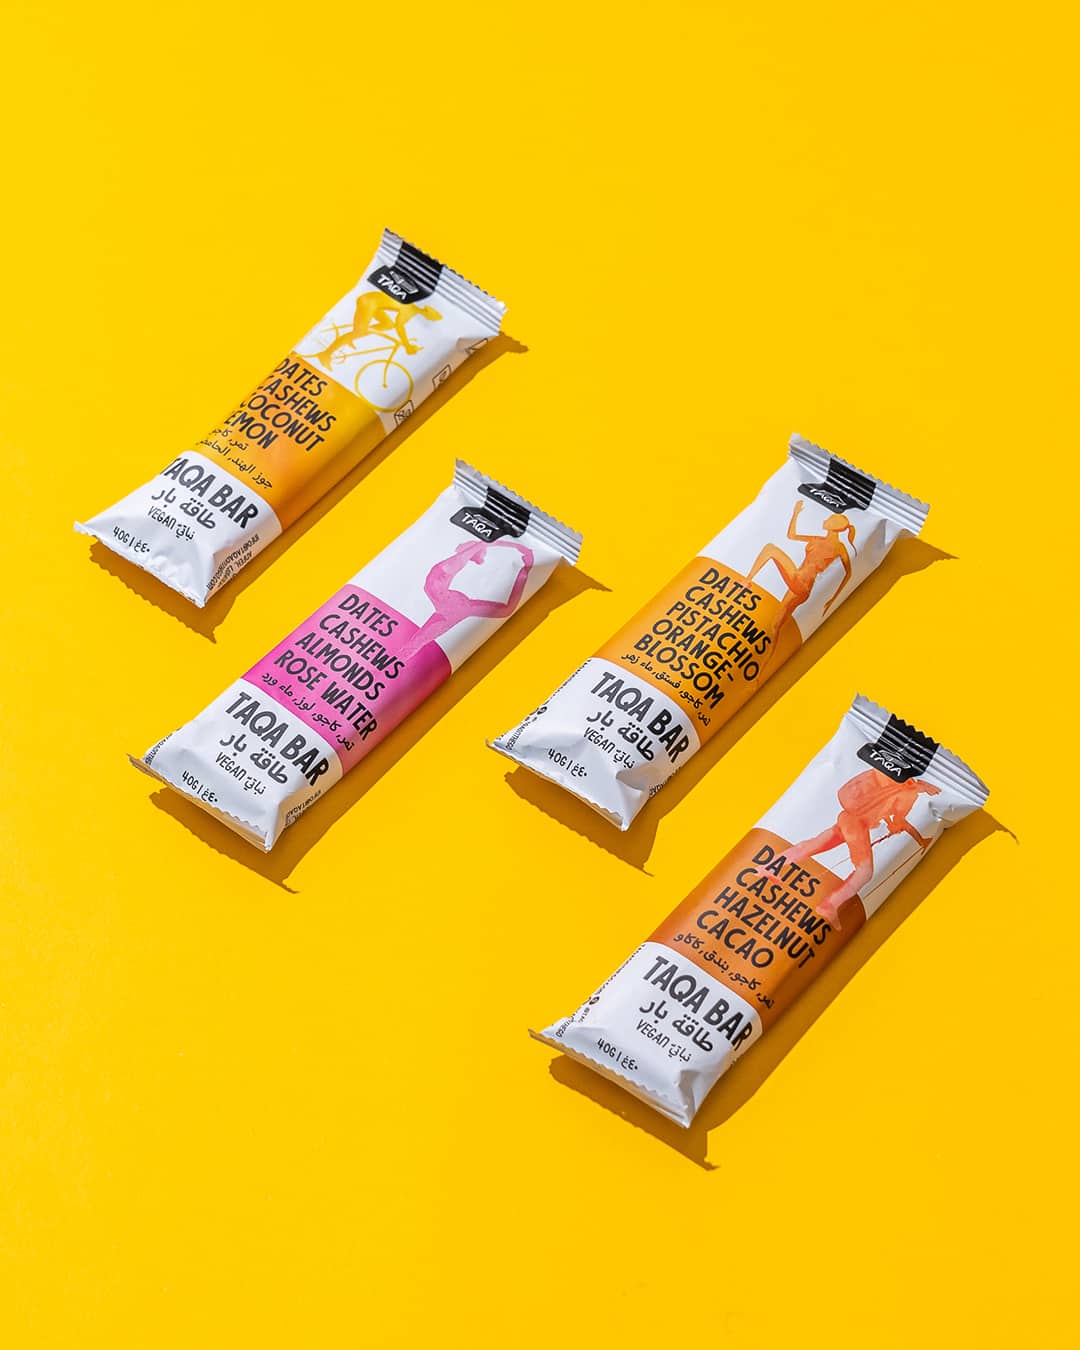 Taqa snacks packaging design